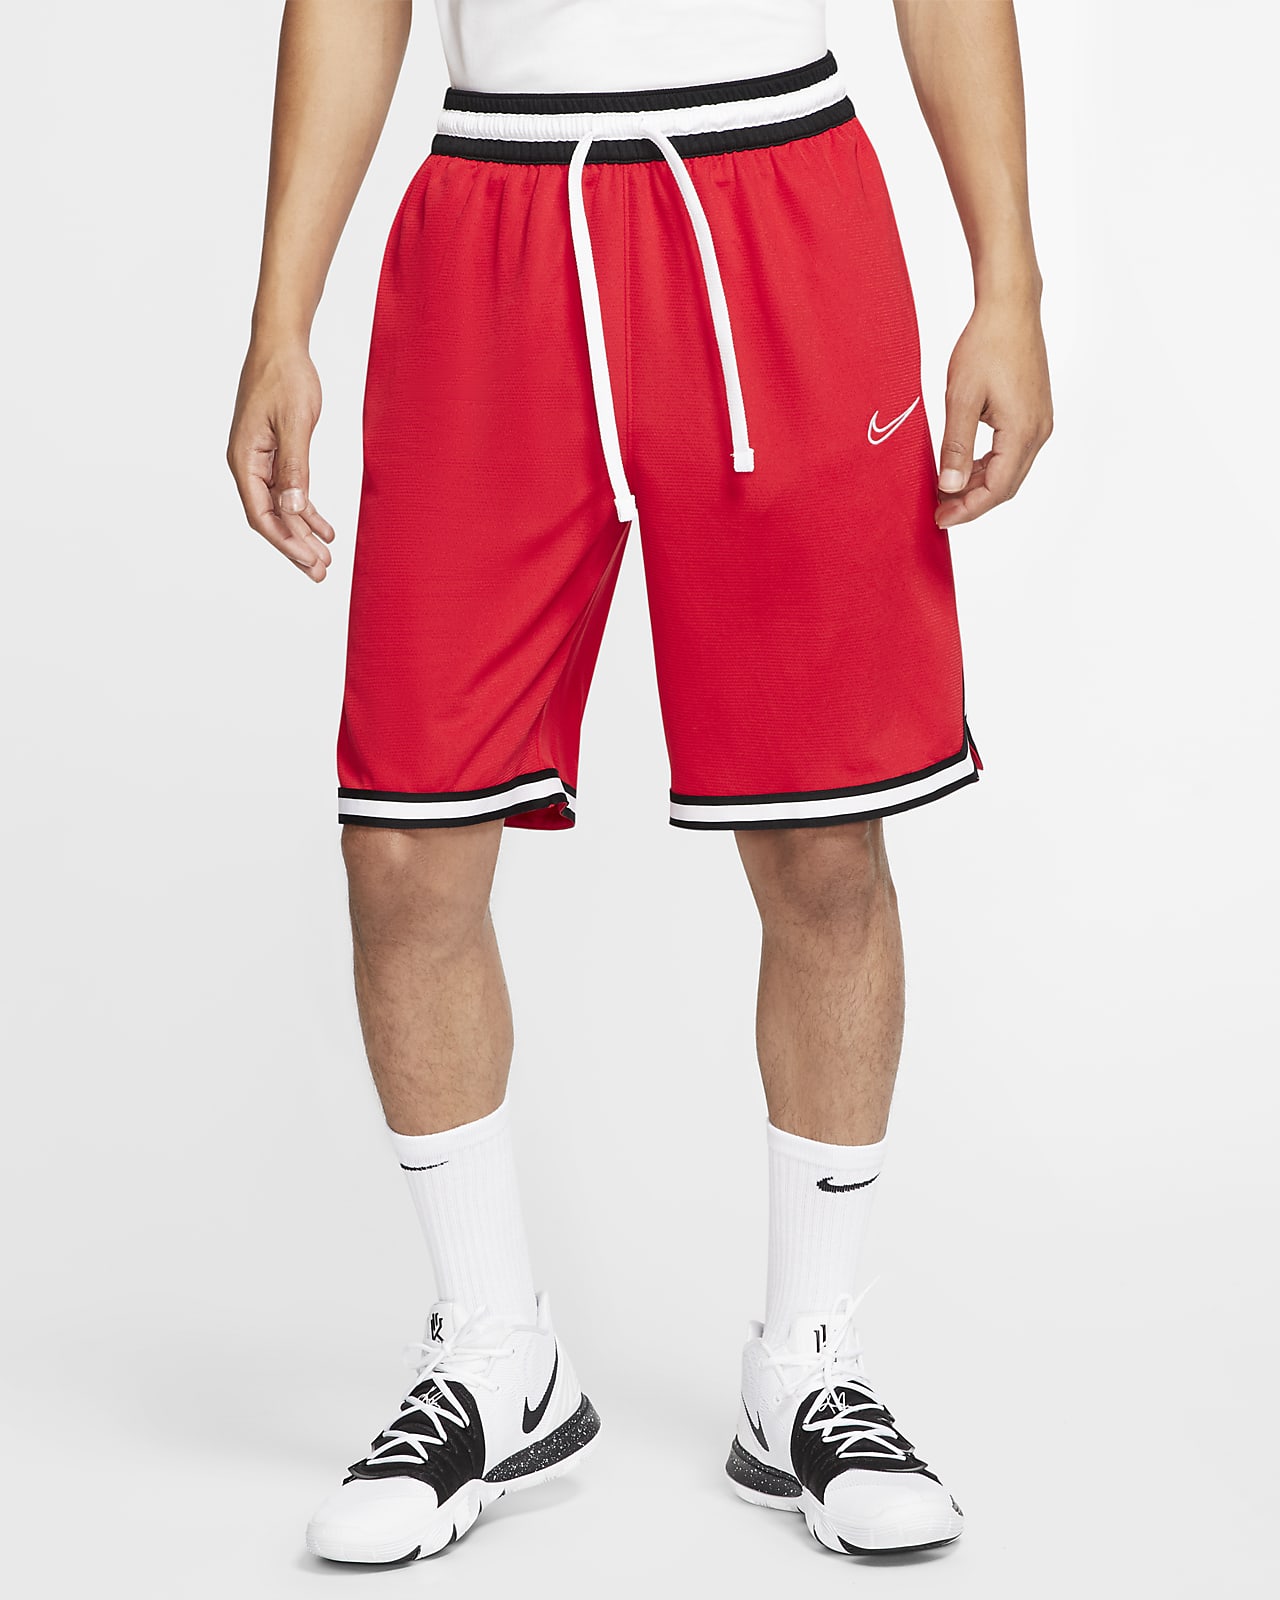 Nike Dri-FIT DNA Basketball Shorts. Nike.com